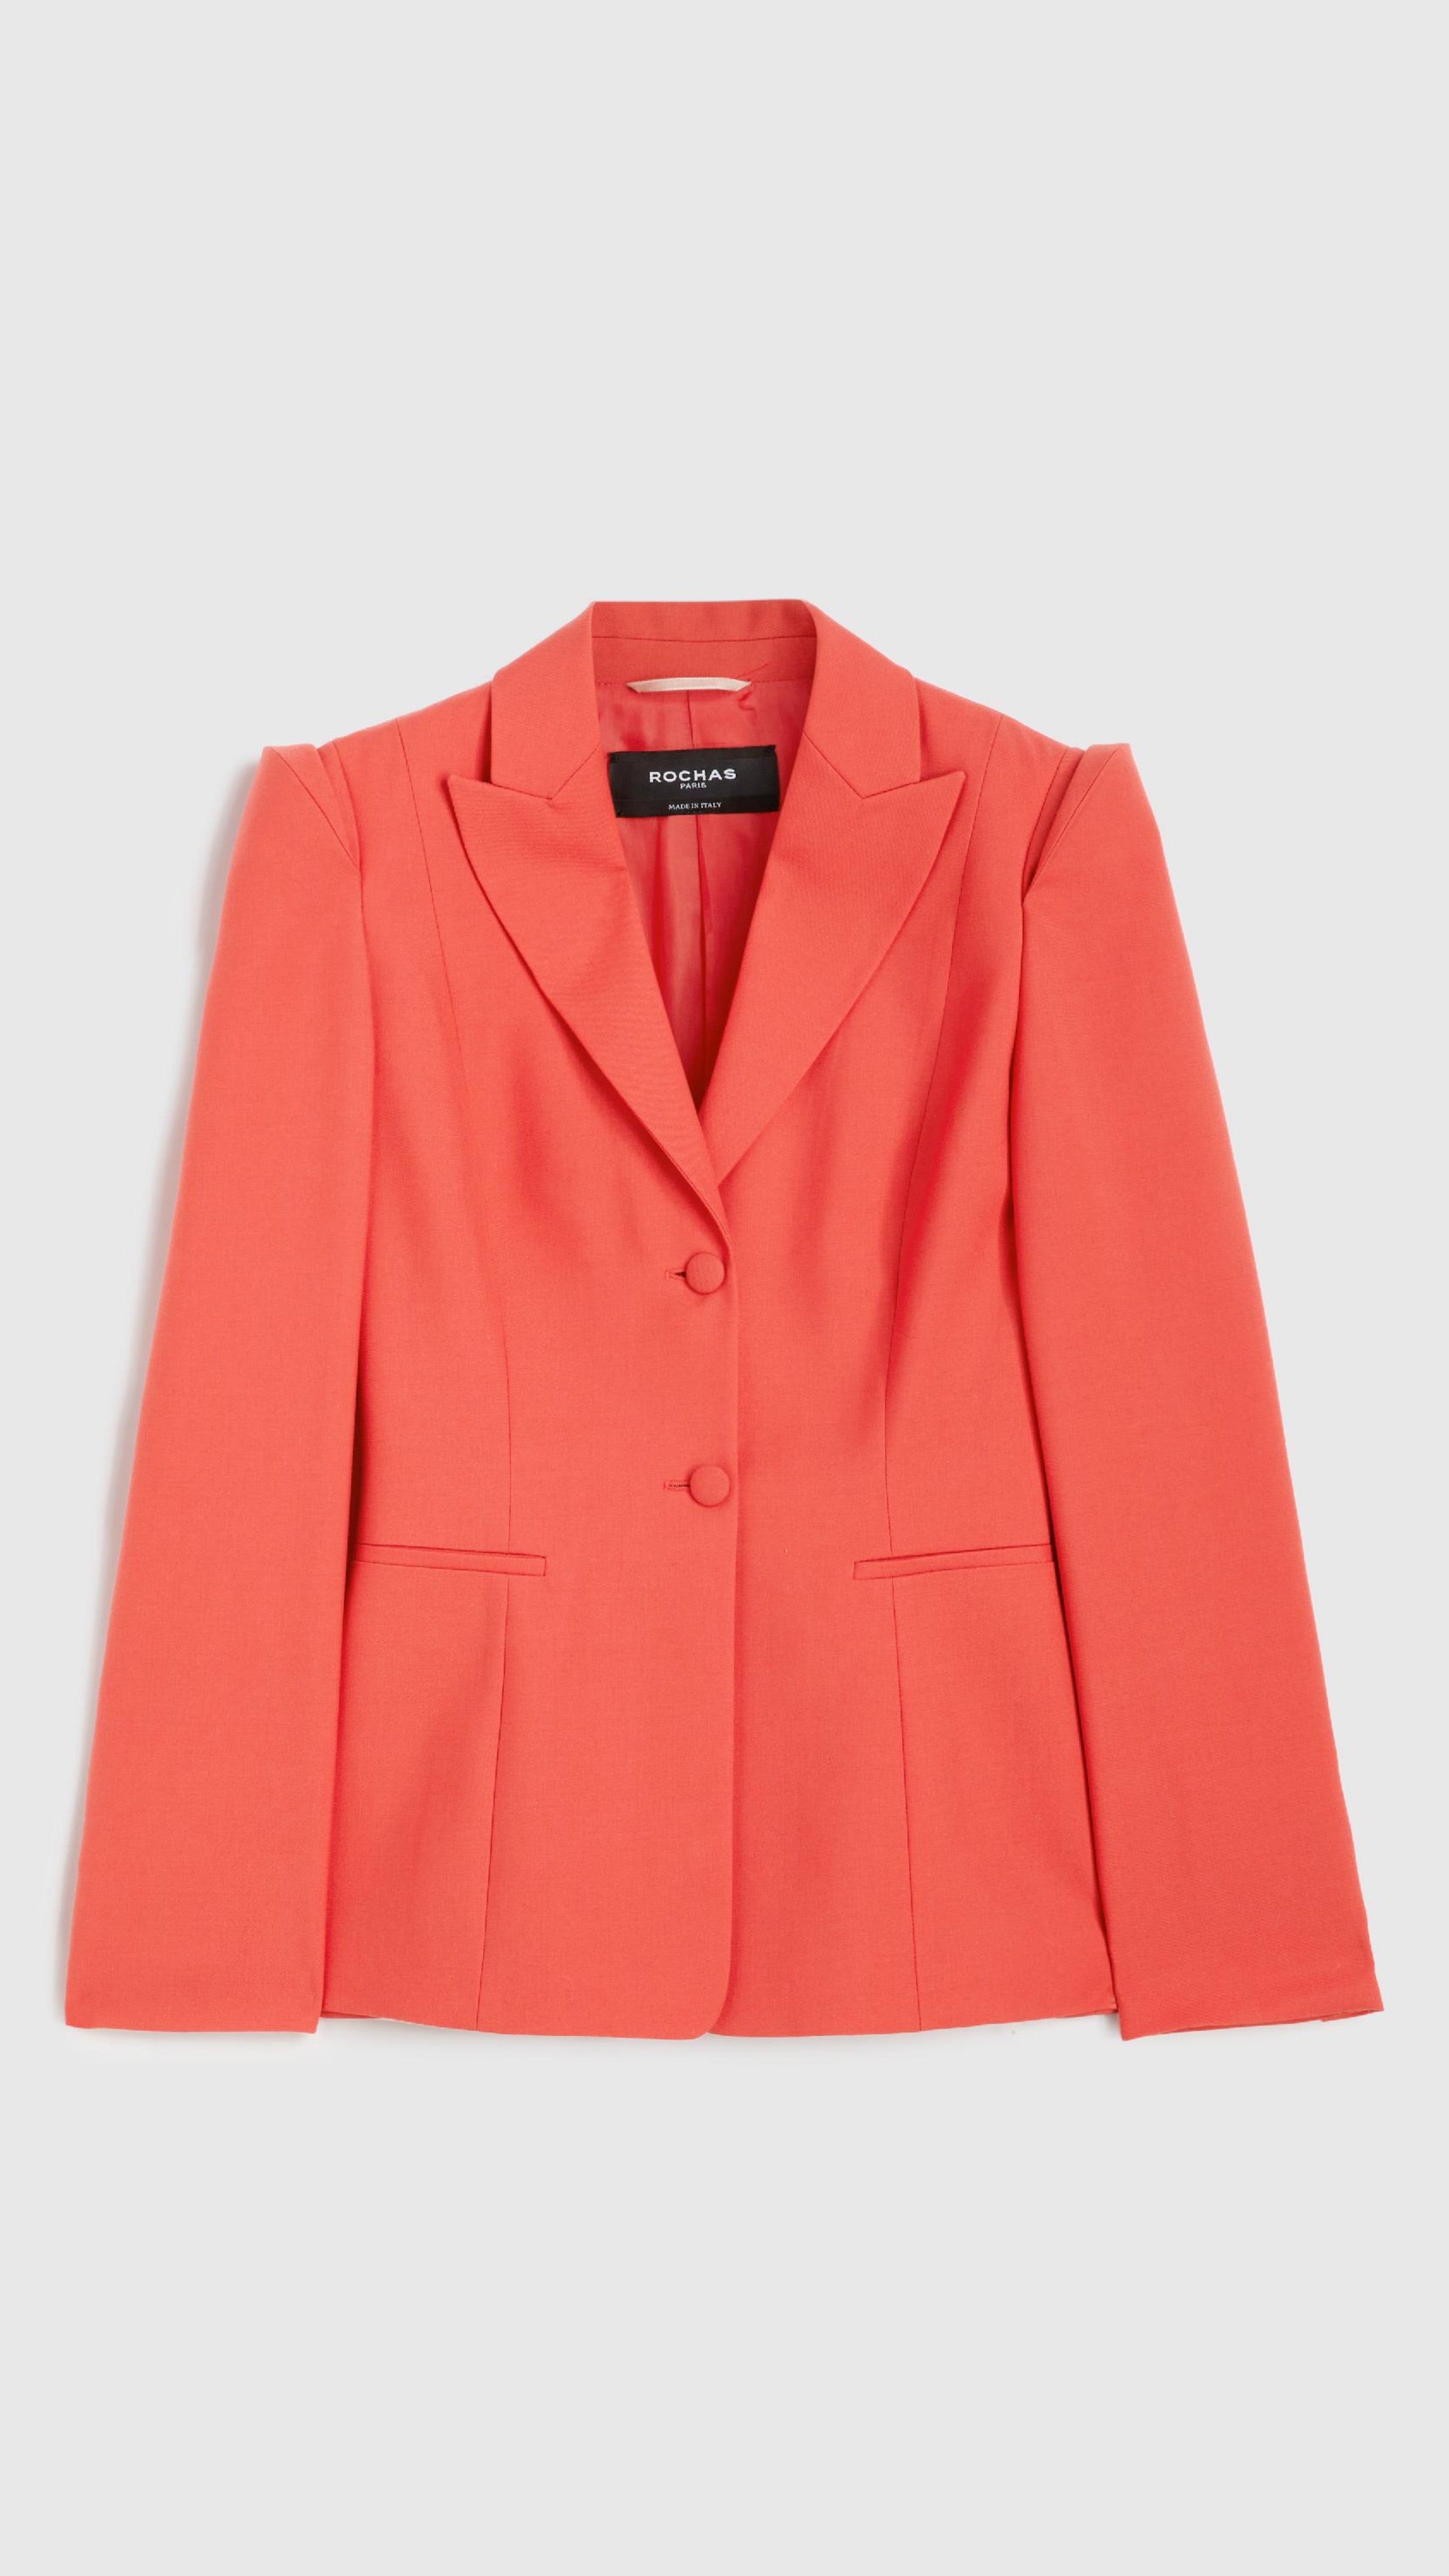 Rochas Paris Two Buttons Jacket. Sharp tailored suit with crisp lapel. Orange light red color. Product photo facing front.